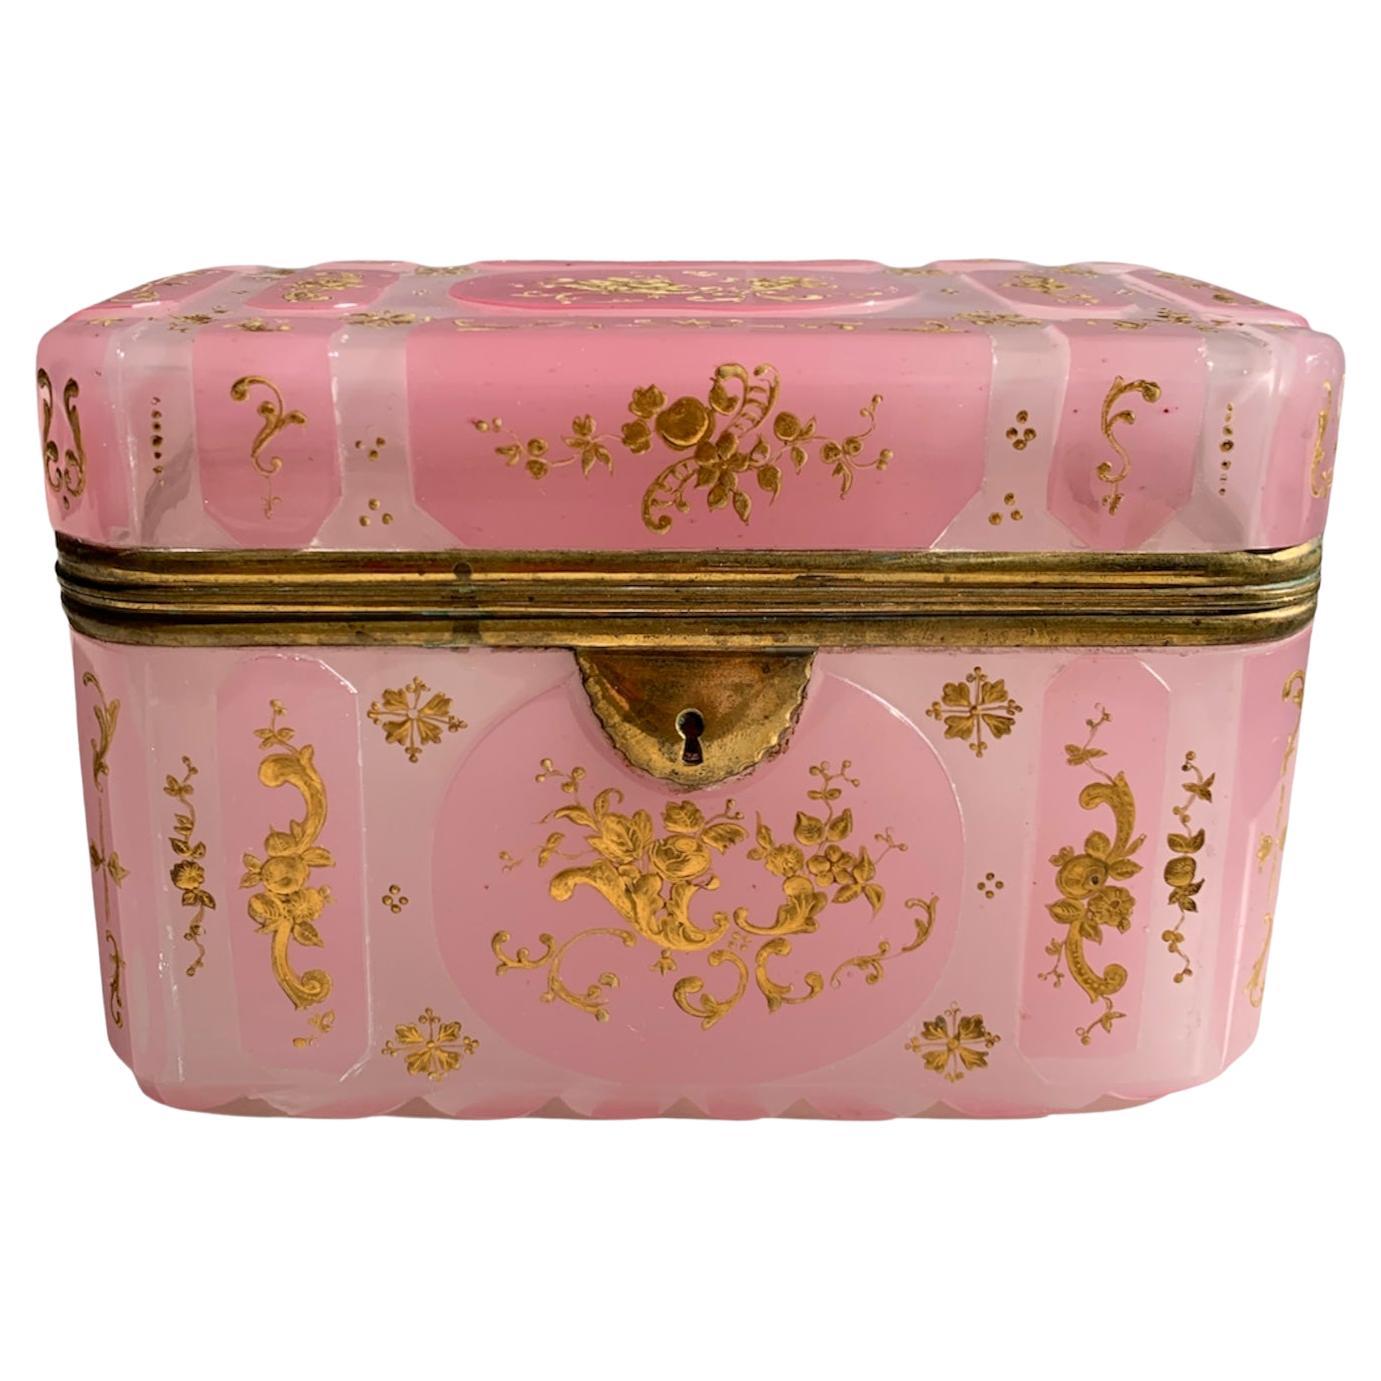 Antique Bohemian Pink Opaline Enameled Glass Casket Box, 19th Century